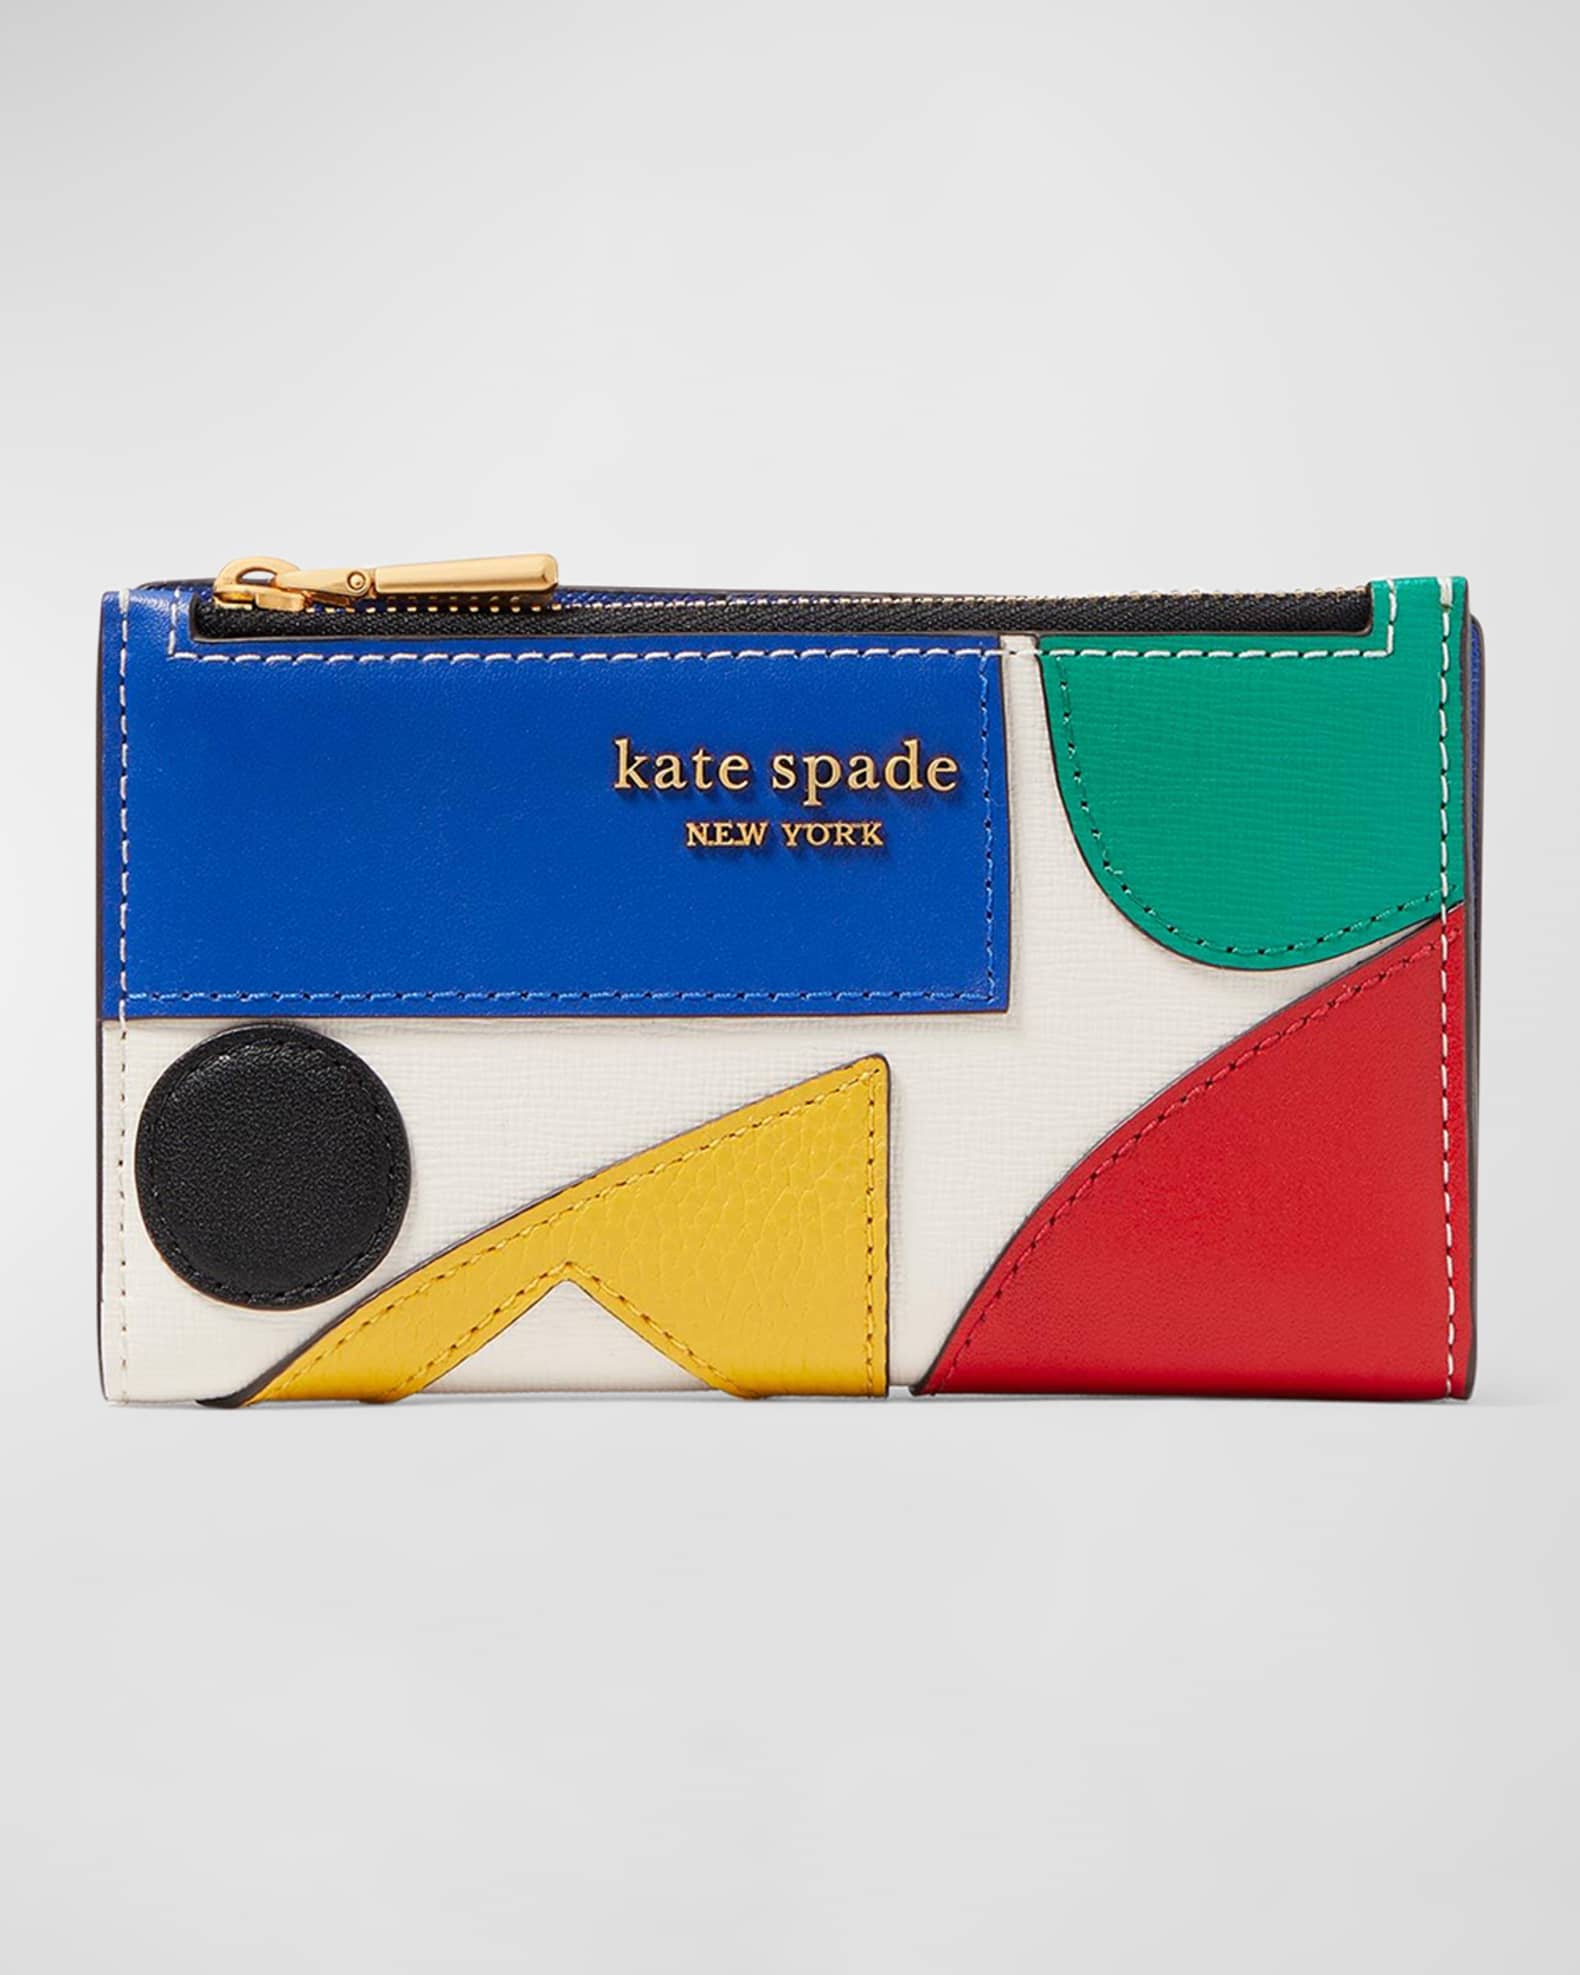 Kate spade new york Morgan Lemon Small Slim Leather Bifold Wallet